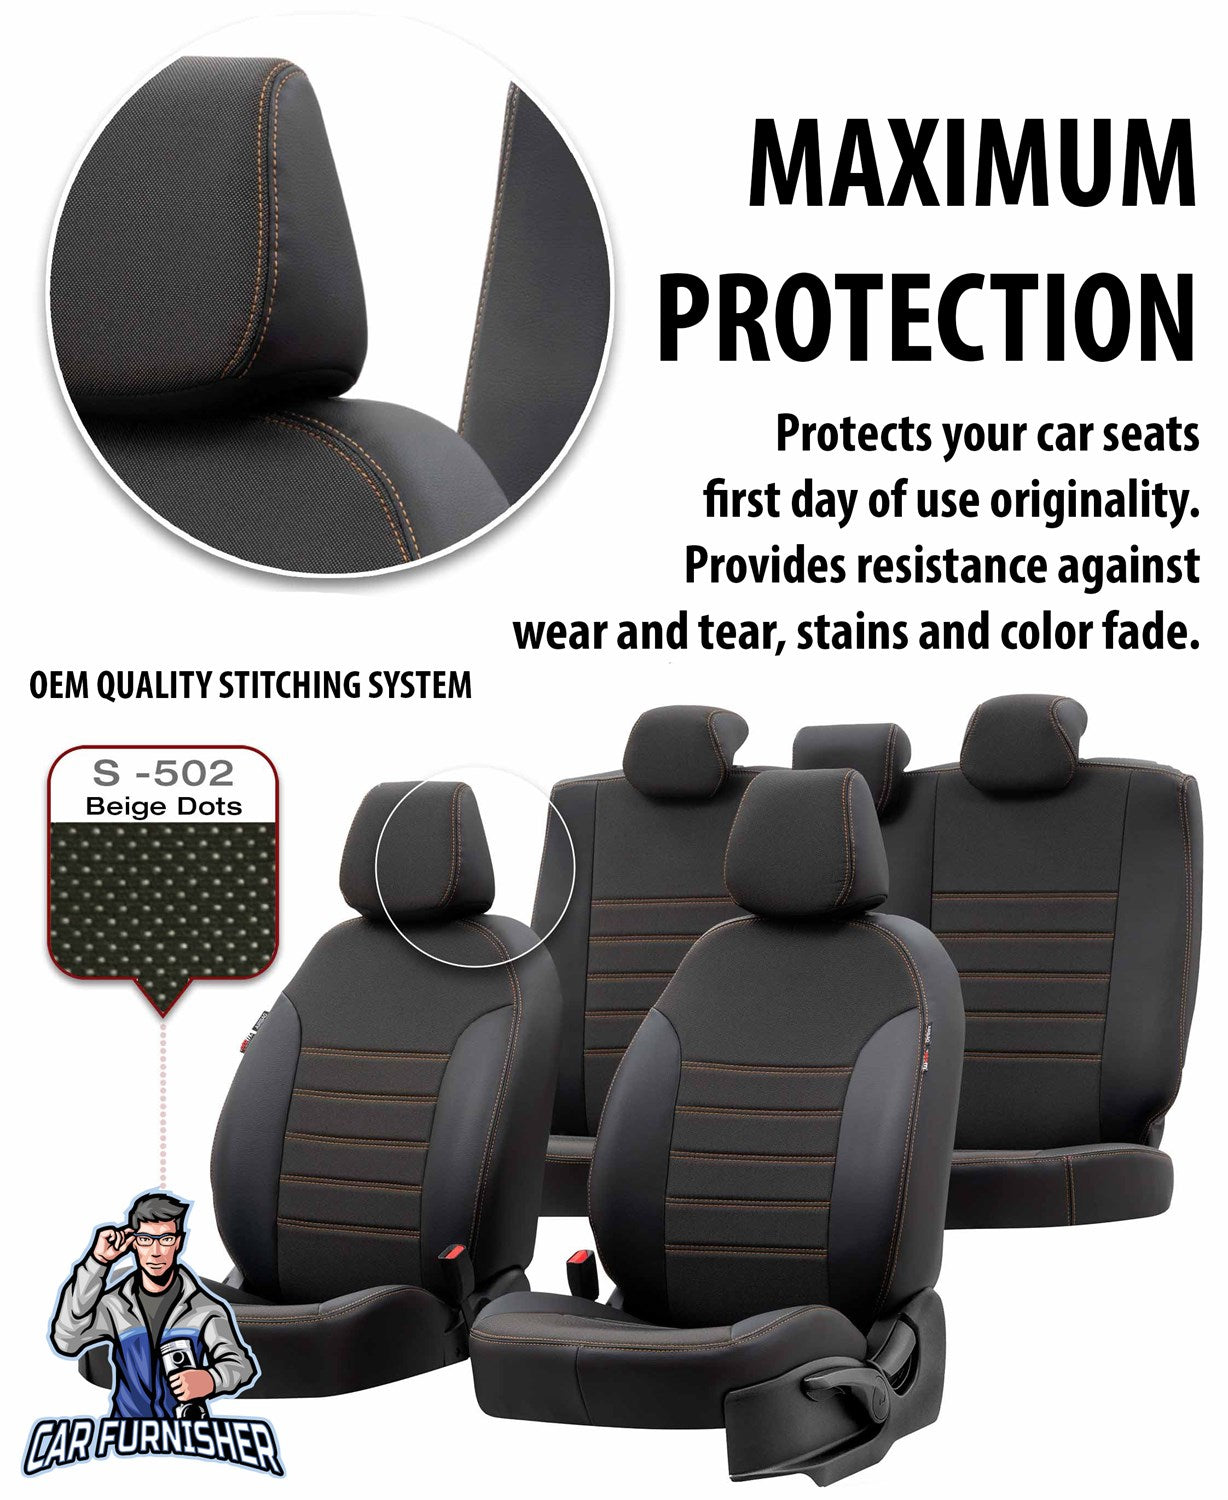 Volkswagen Beetle Seat Cover Paris Leather & Jacquard Design Black Leather & Jacquard Fabric